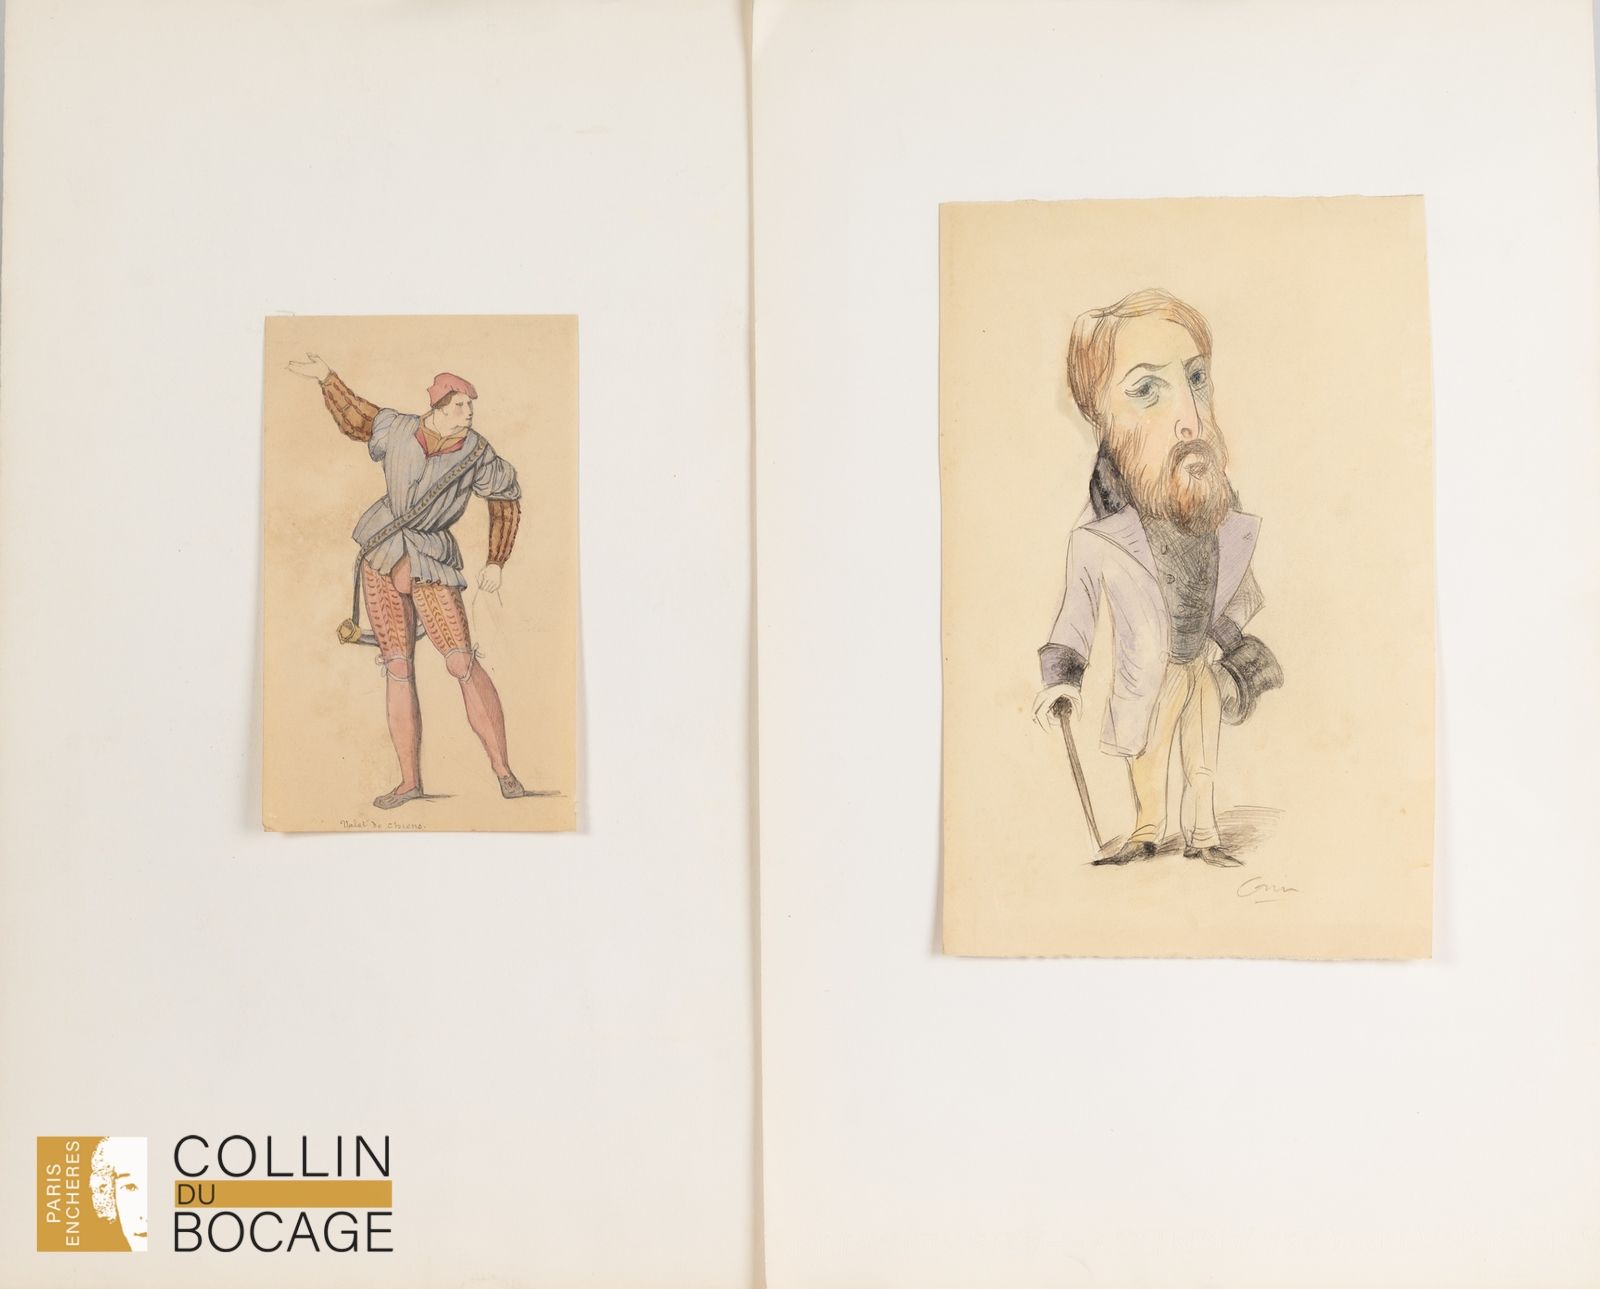 Null 手持拐杖和帽子的男子漫画
铅笔和水彩
右下方有签名
29 x 19 厘米

附有一幅 "狗侍从 "研究作品，石墨和水彩，19.5 x 12 厘米